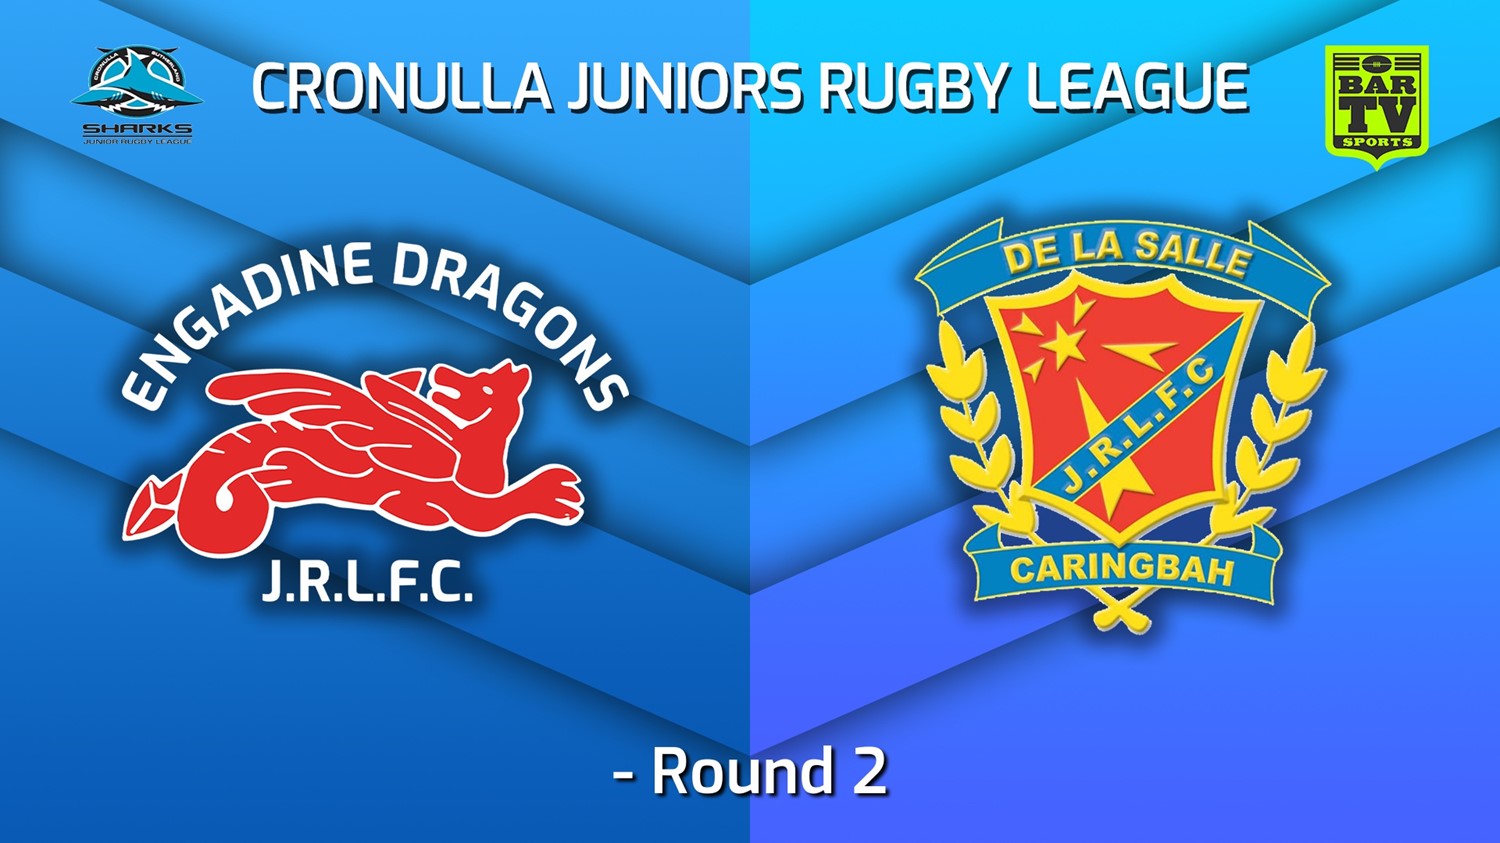 220508-Cronulla Juniors - U10s Blues Tag Round 2 - Engadine Dragons v De La Salle Minigame Slate Image